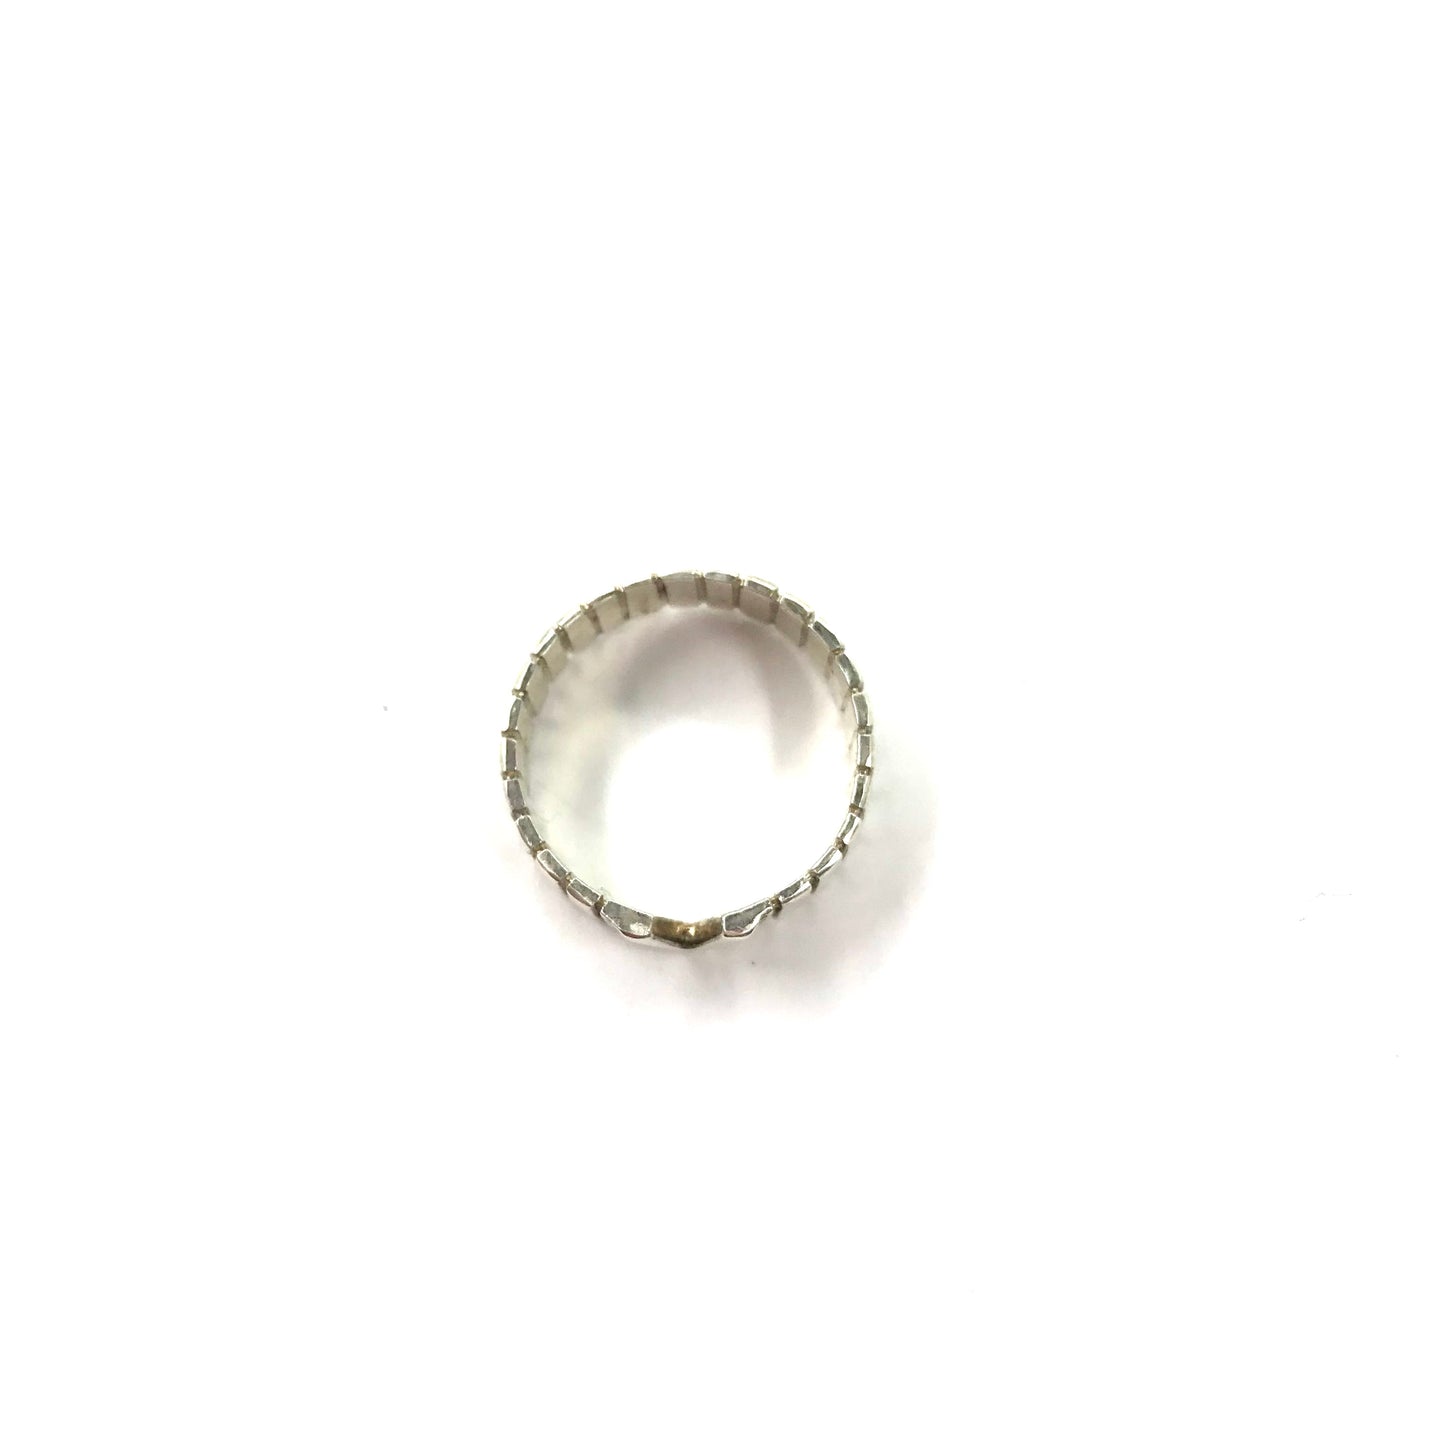 Vintage Silver Ring チゼルリング シルバーリング 13号 SILVER